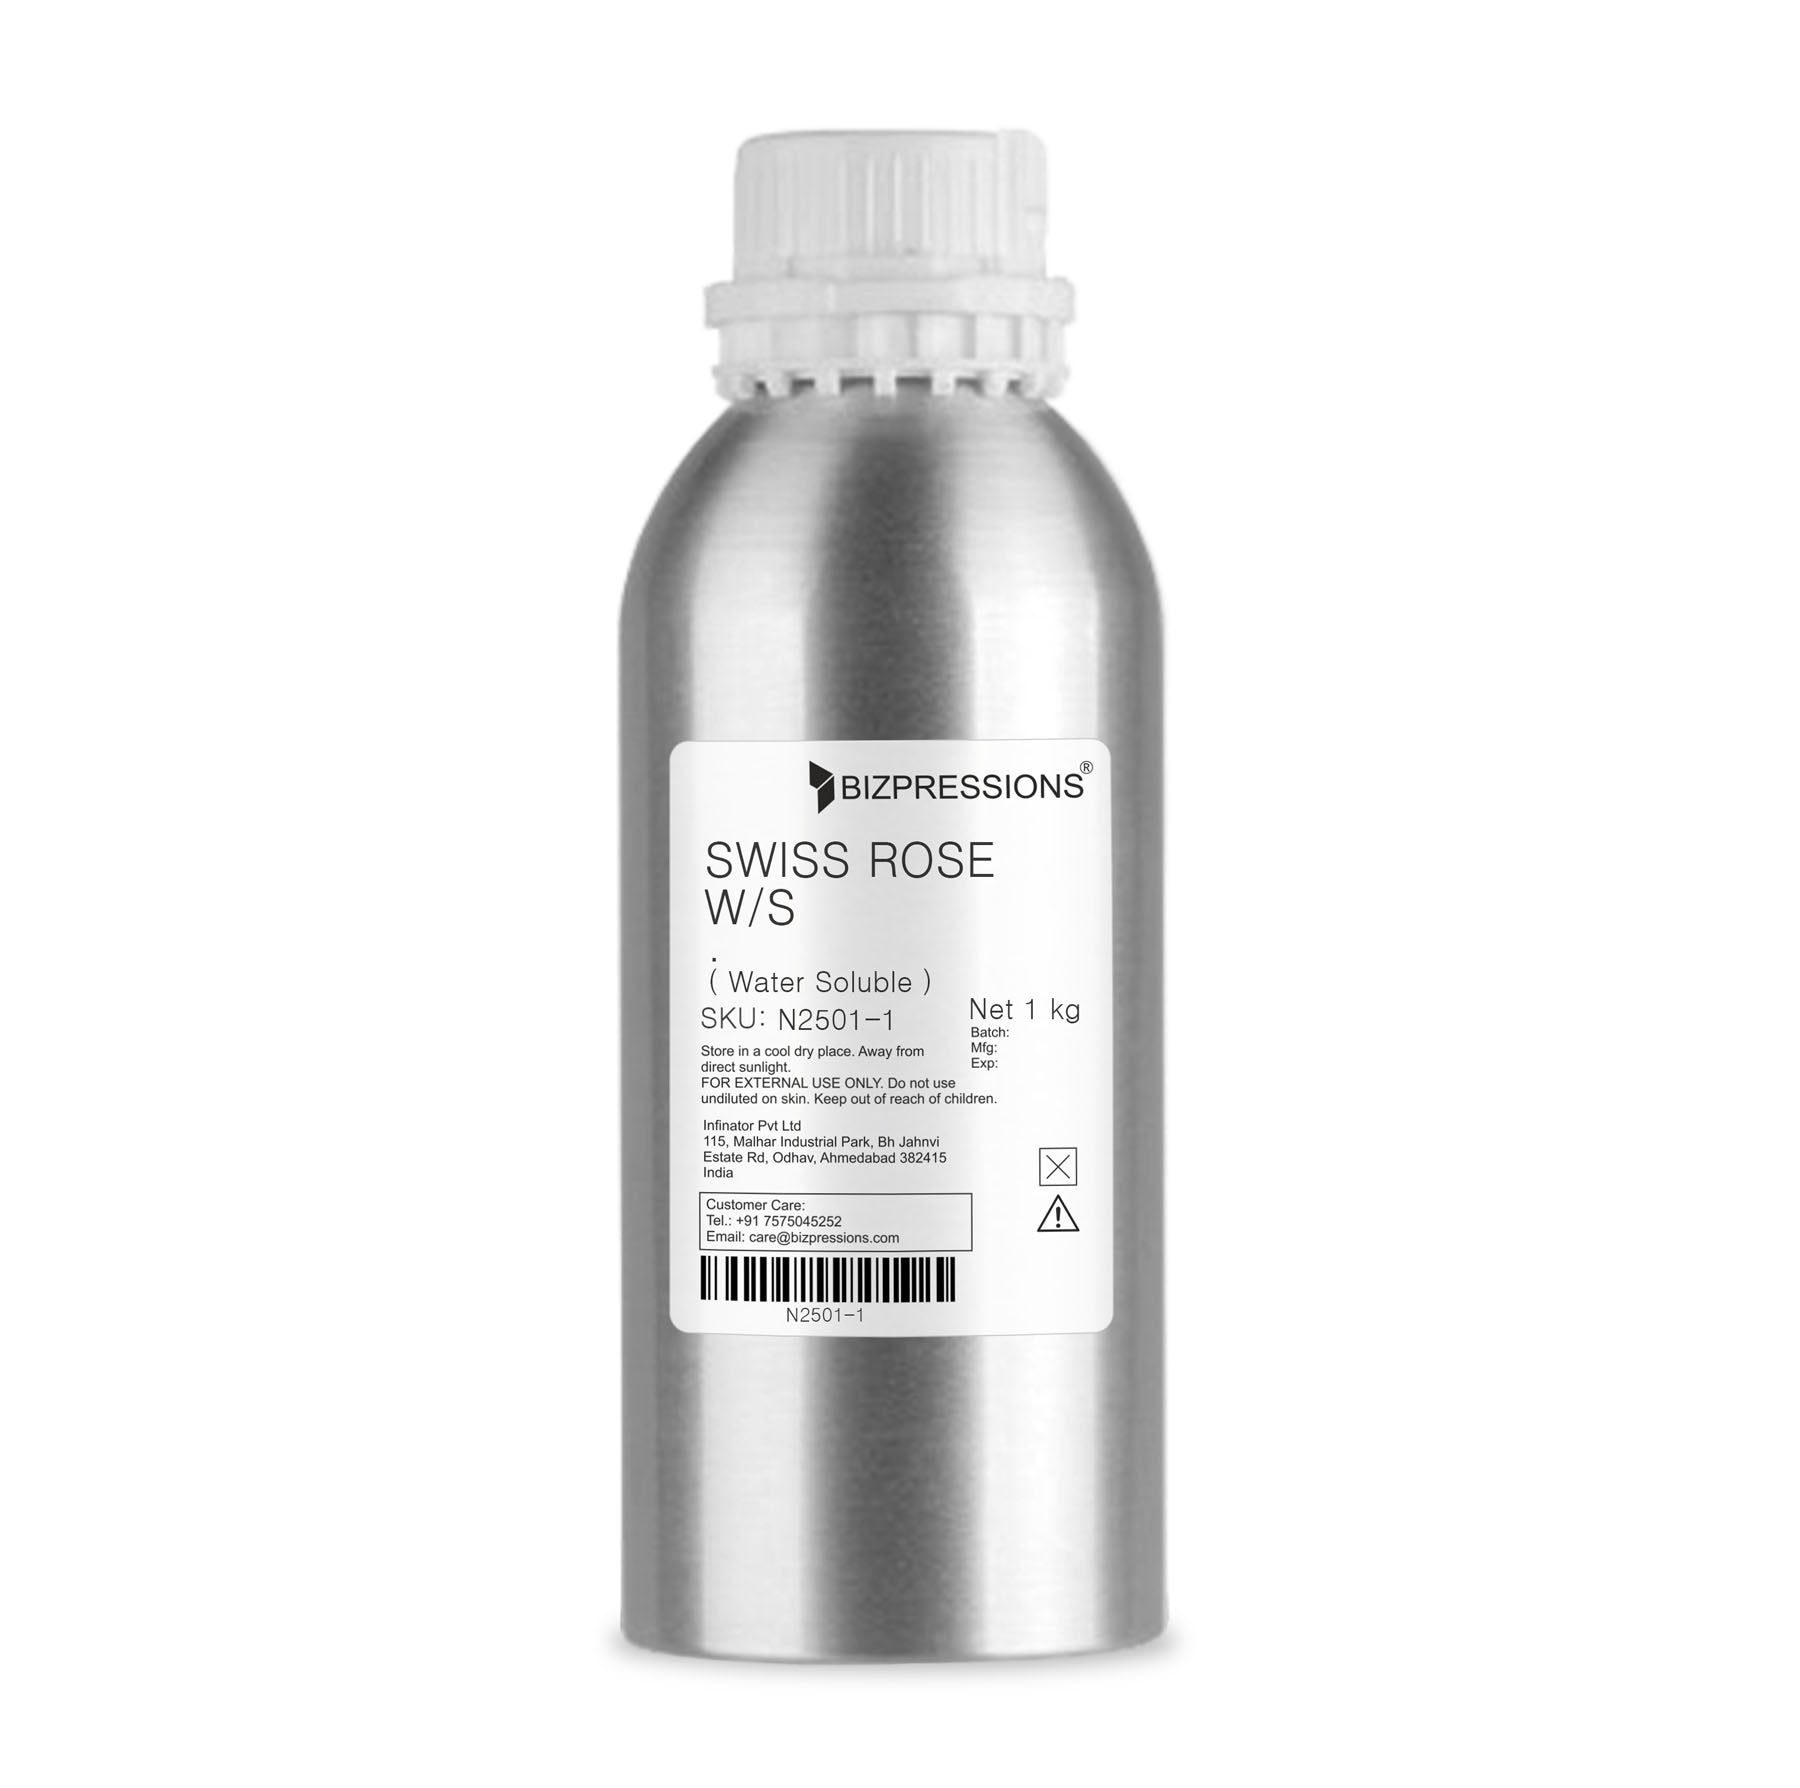 SWISS ROSE W/S - Fragrance ( Water Soluble ) - 1 kg